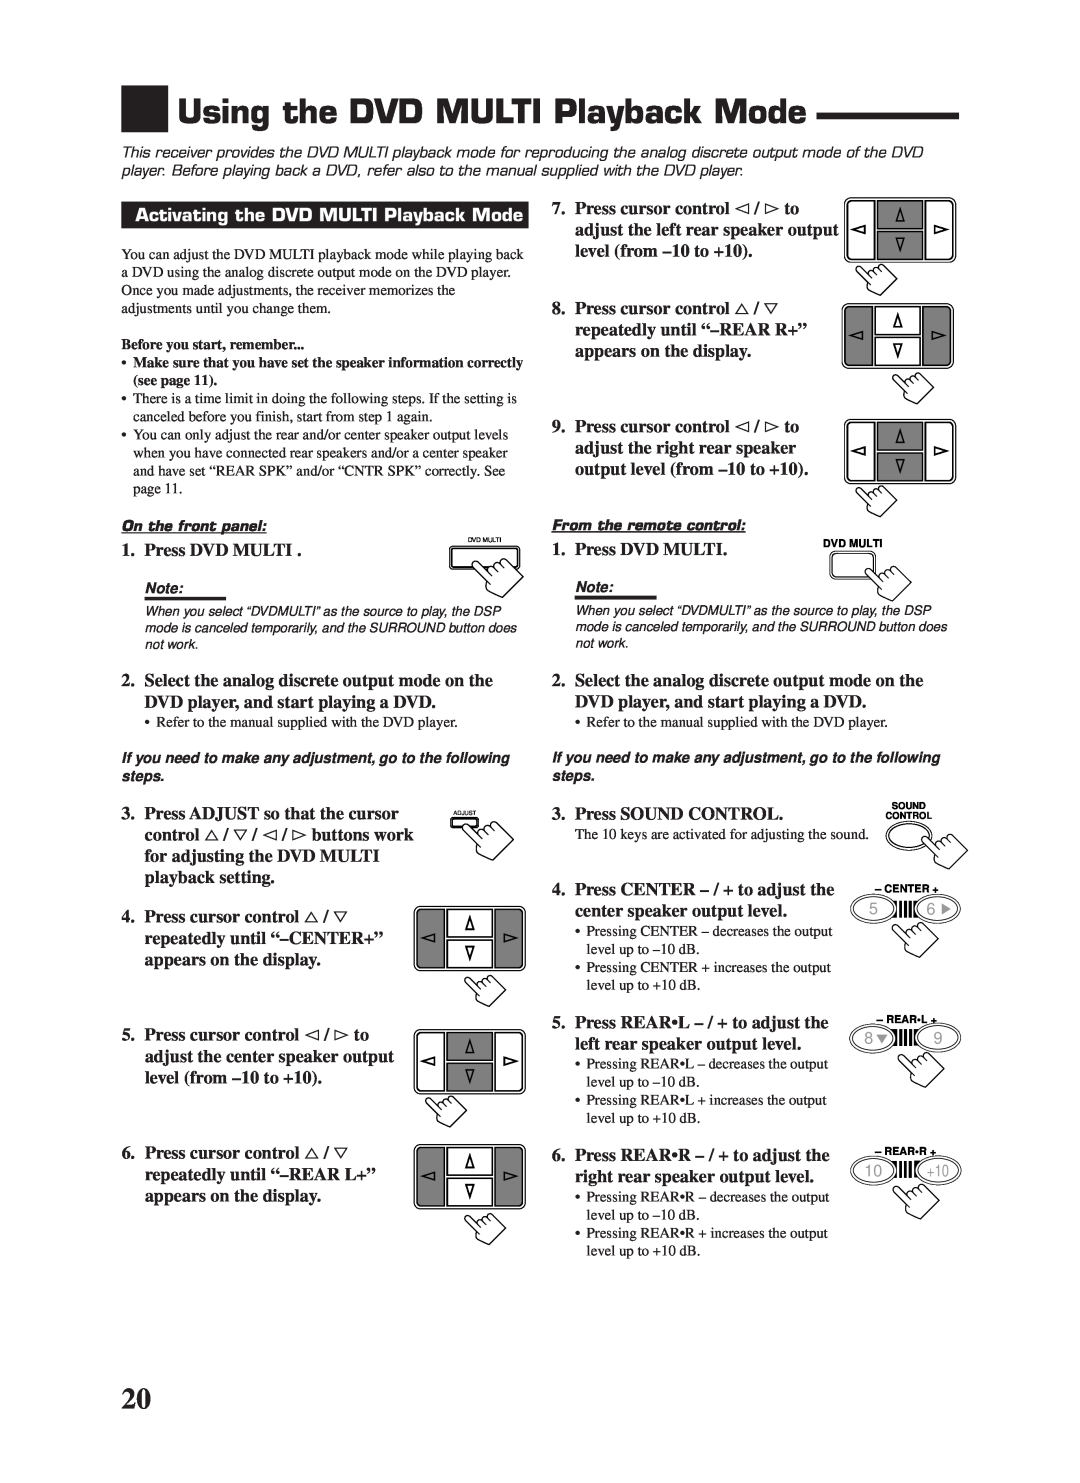 JVC RX-558VBK manual Using the DVD MULTI Playback Mode, Activating the DVD MULTI Playback Mode 